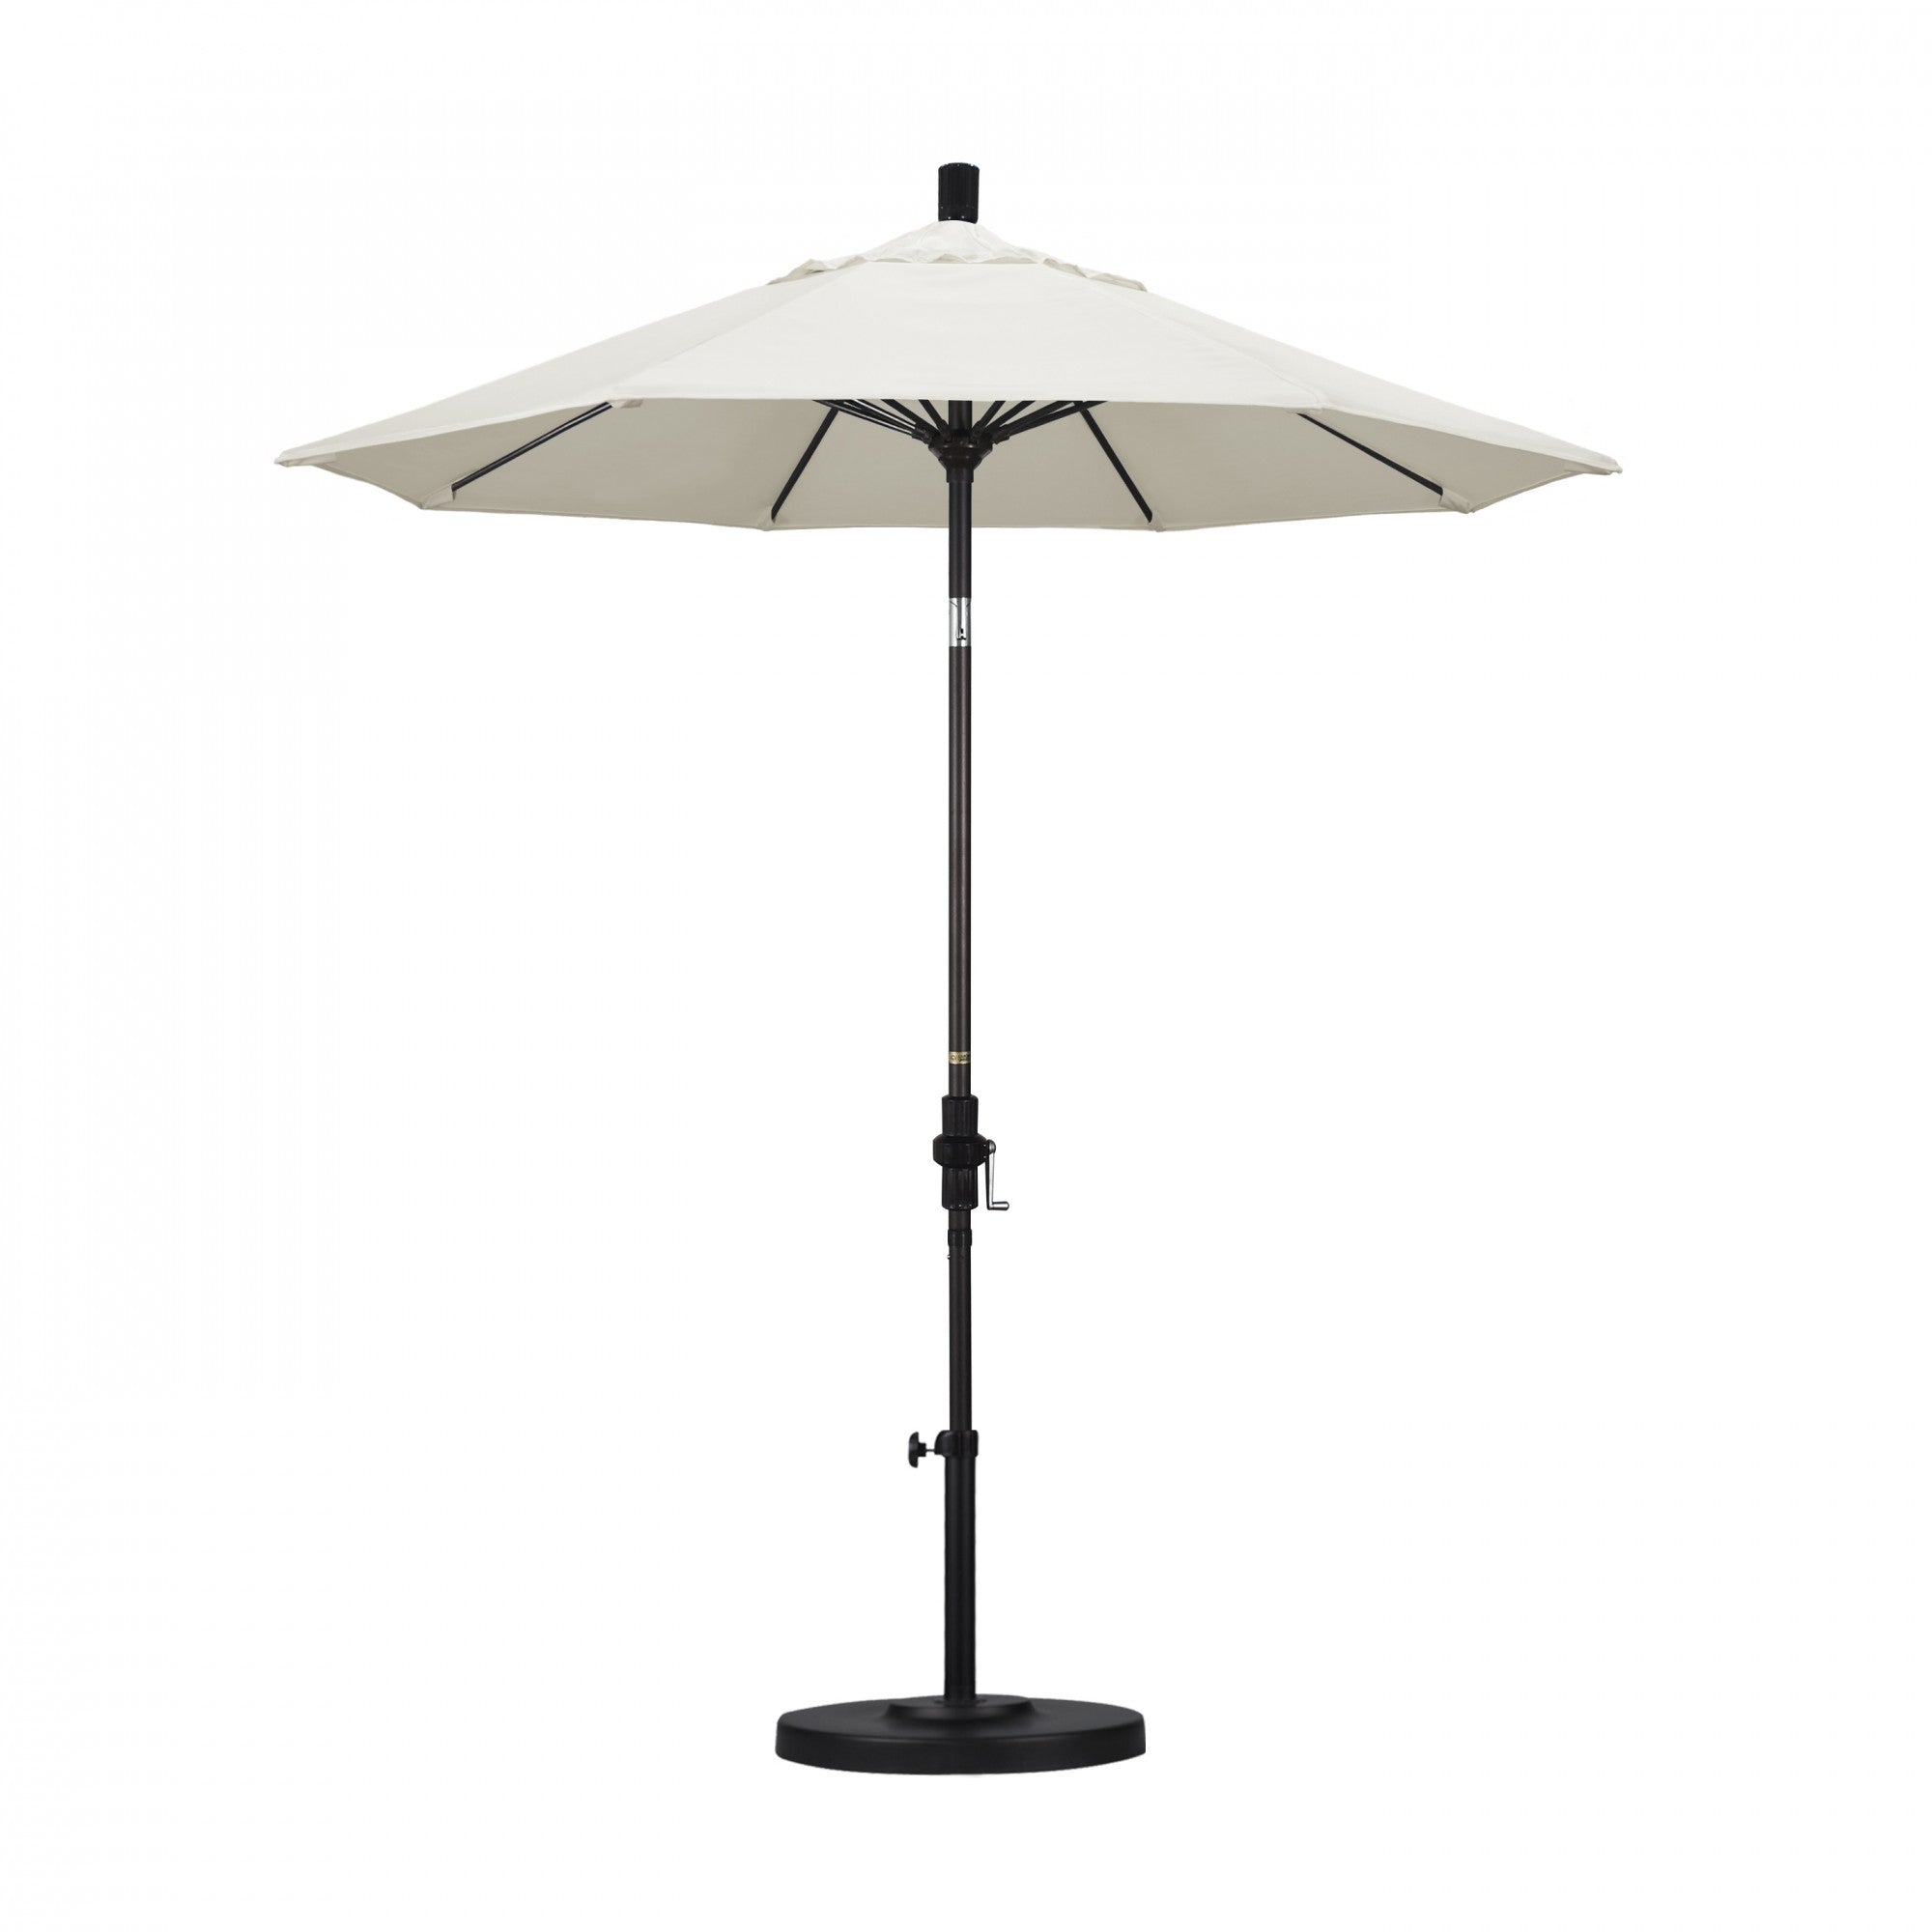 California Umbrella - 7.5' - Patio Umbrella Umbrella - Aluminum Pole - White - Olefin - GSCUF758117-F04